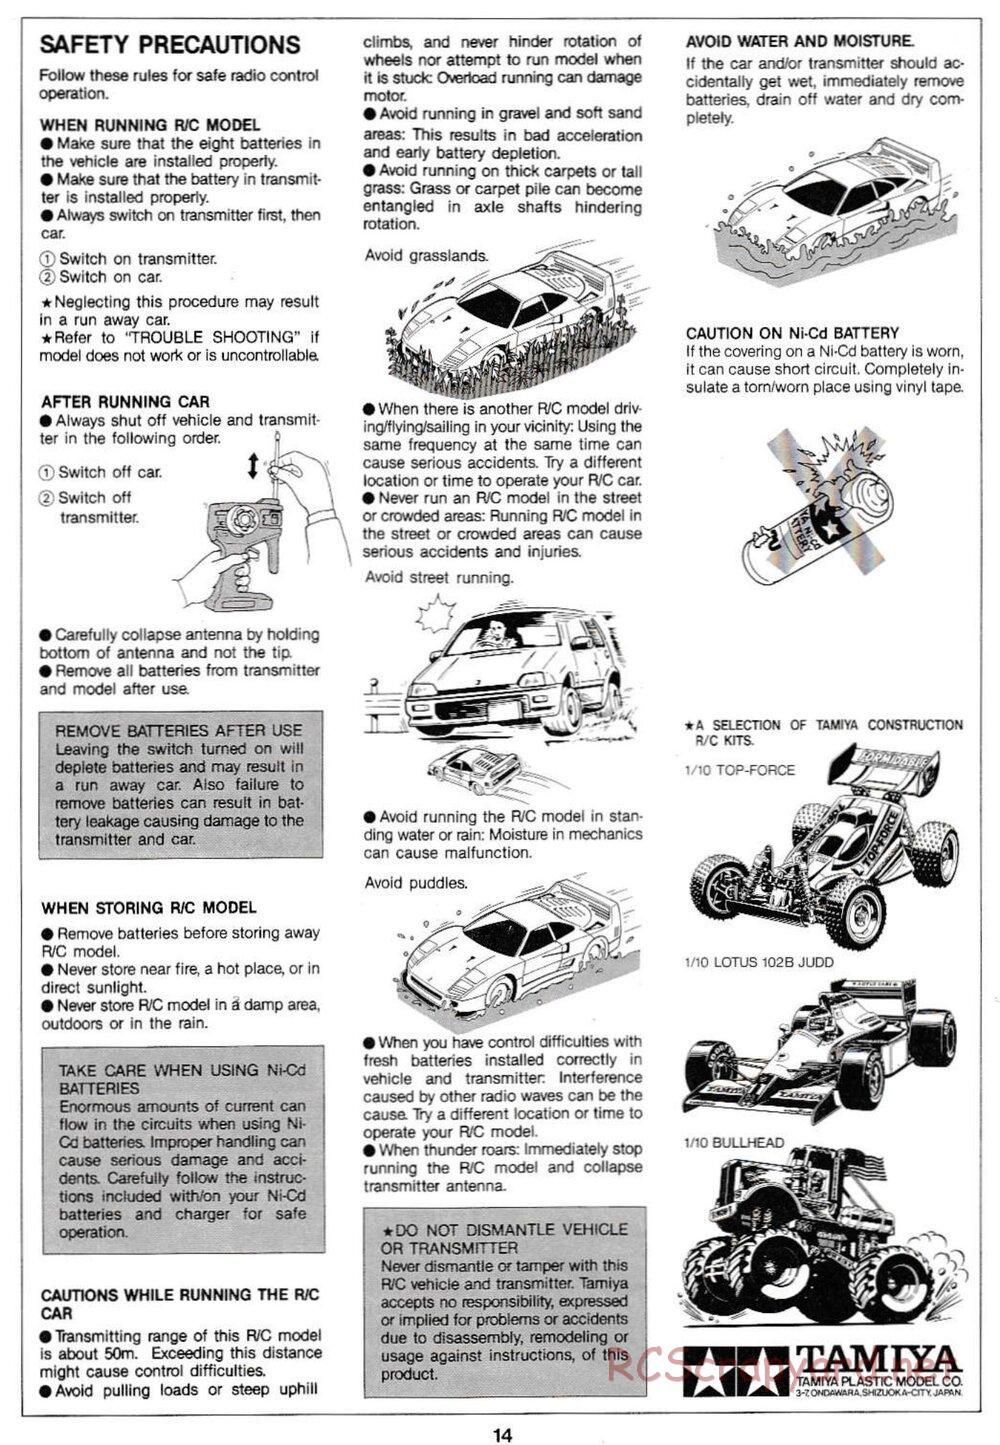 Tamiya - Ferrari F40 QD Chassis - Manual - Page 14